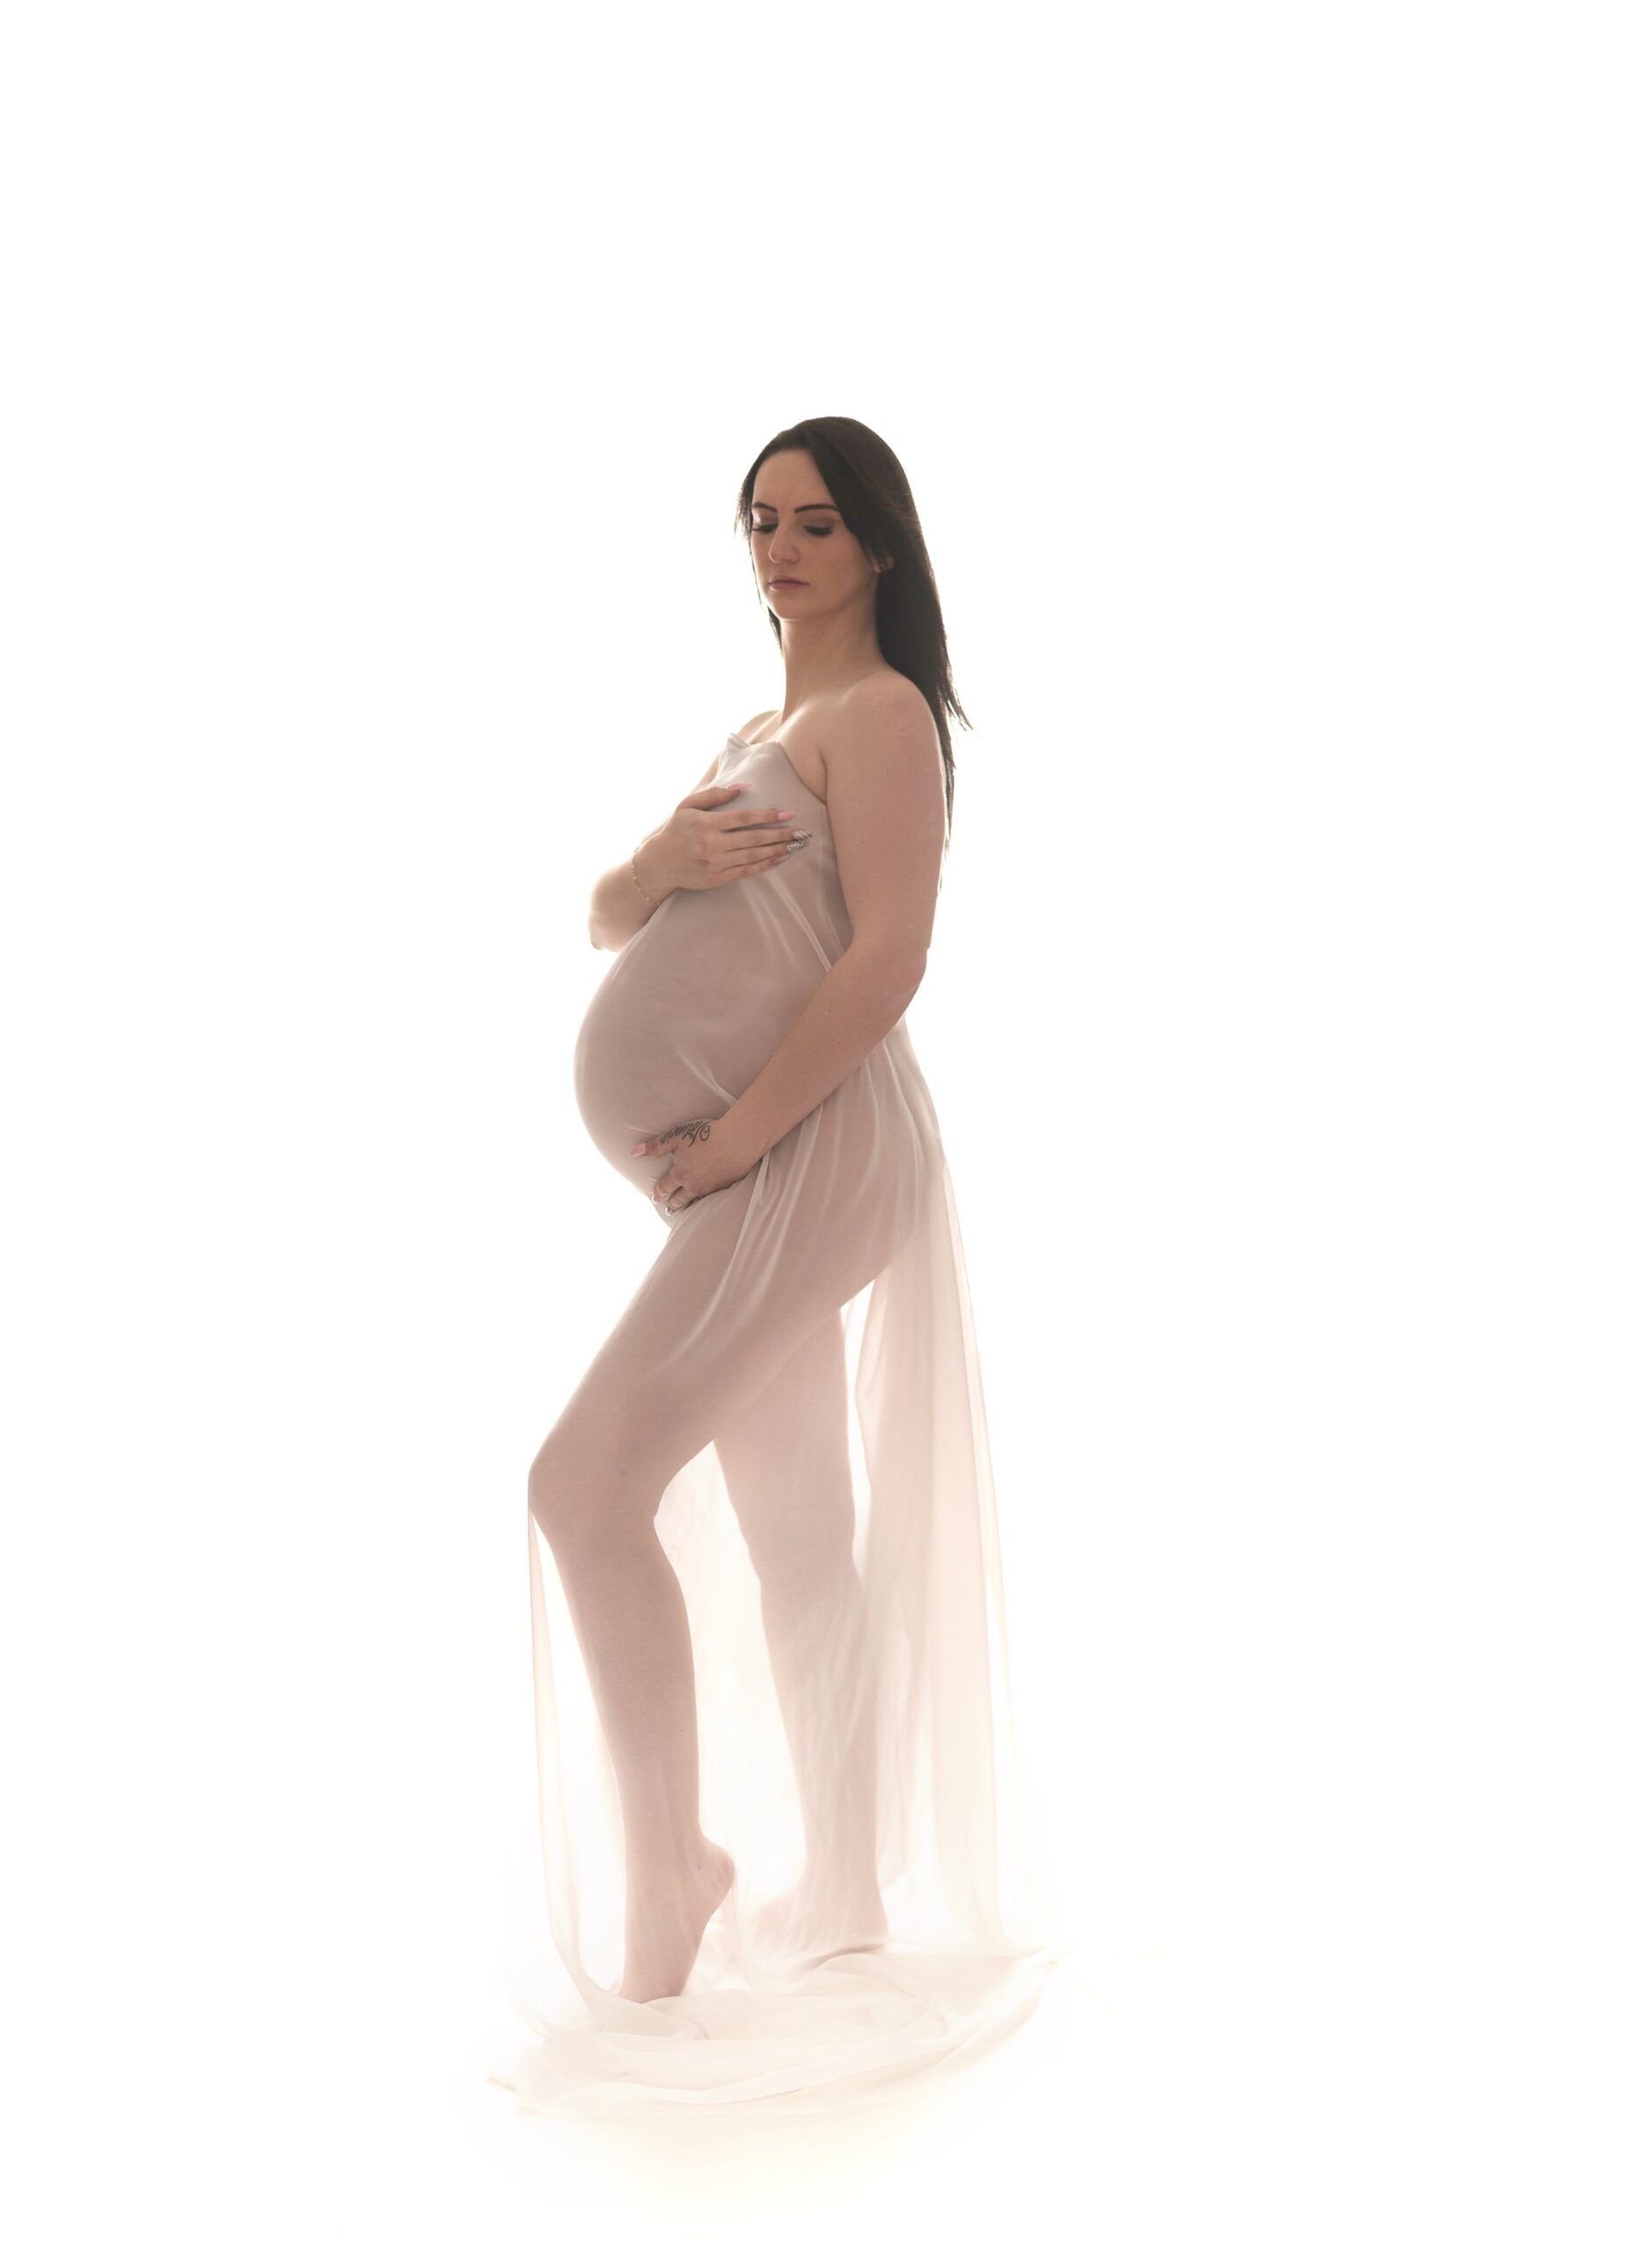 backlit maternity image